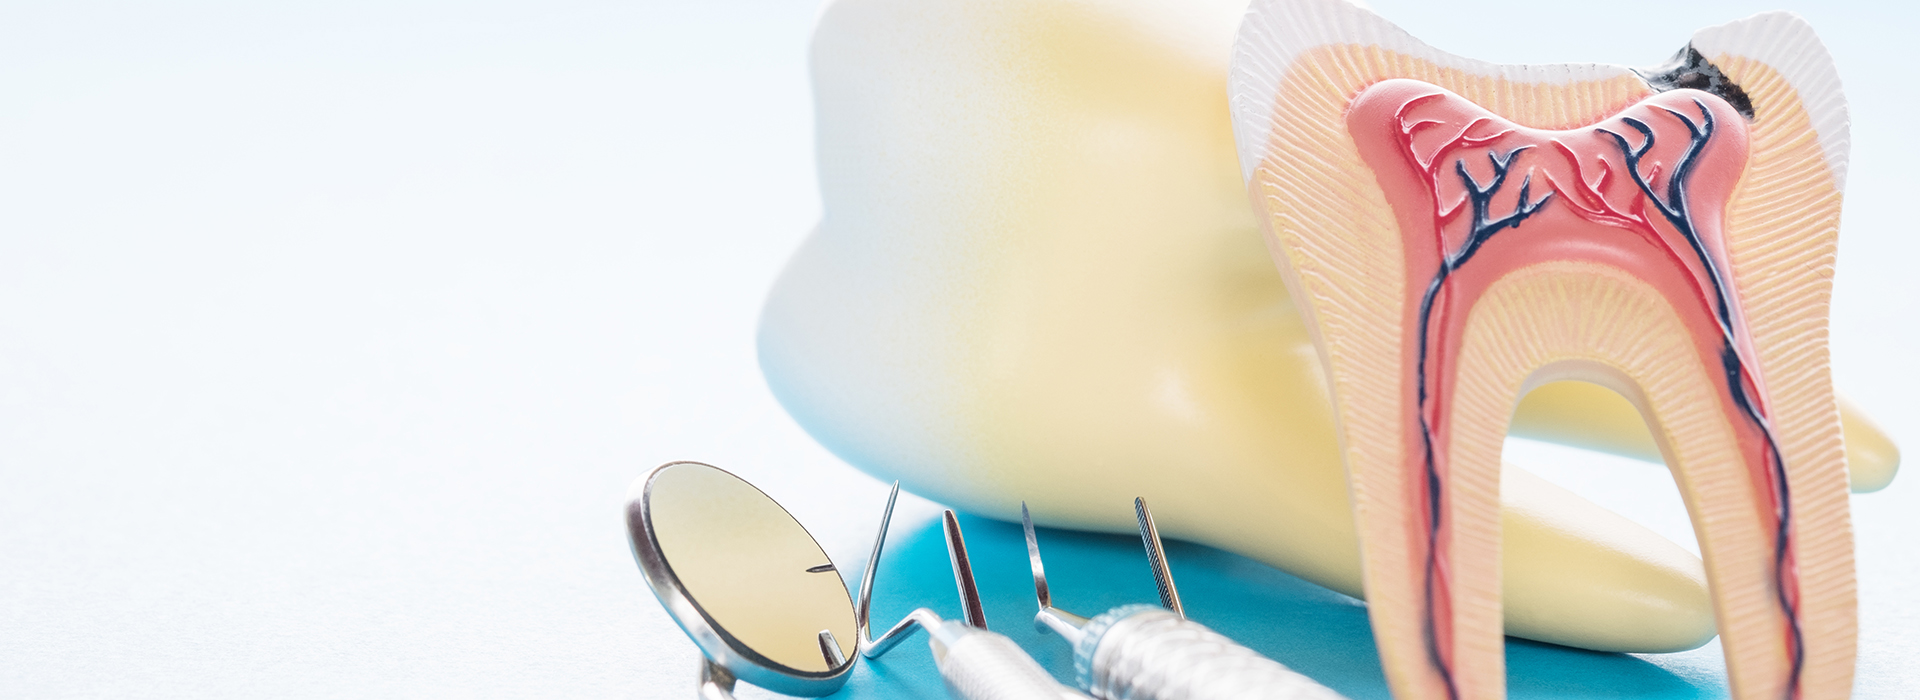 iSmile Dental | Emergency Treatment, Dental Cleanings and Digital Impressions